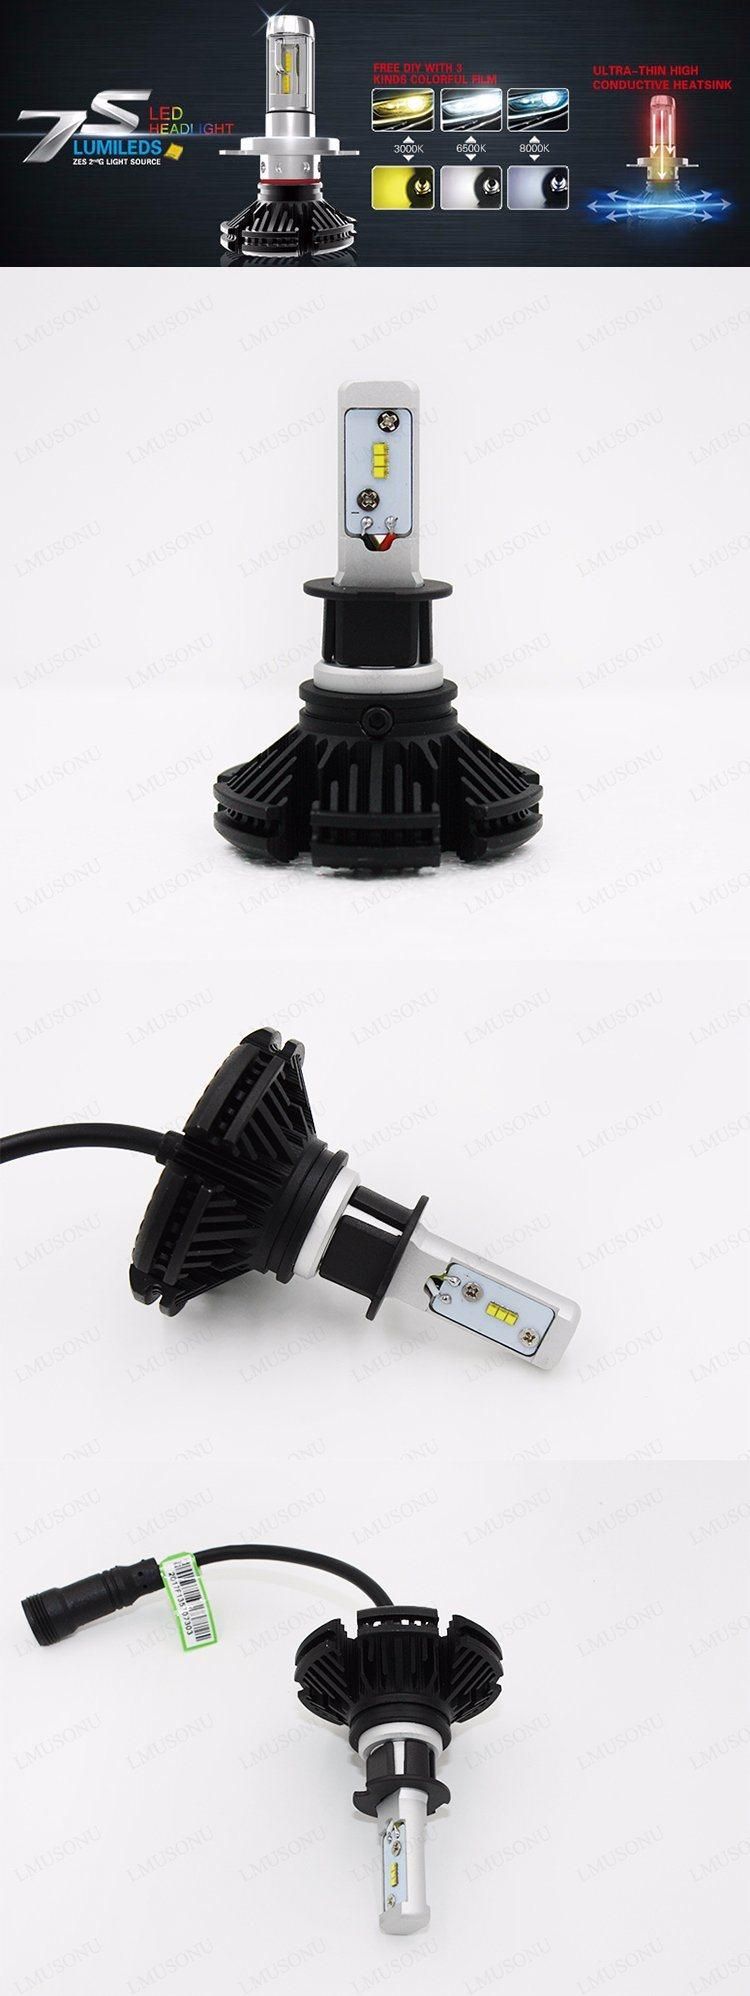 Lmusonu LED Car Light 7s H3 LED Headlight 25W 6000lm Waterproof IP67 Car Accessory